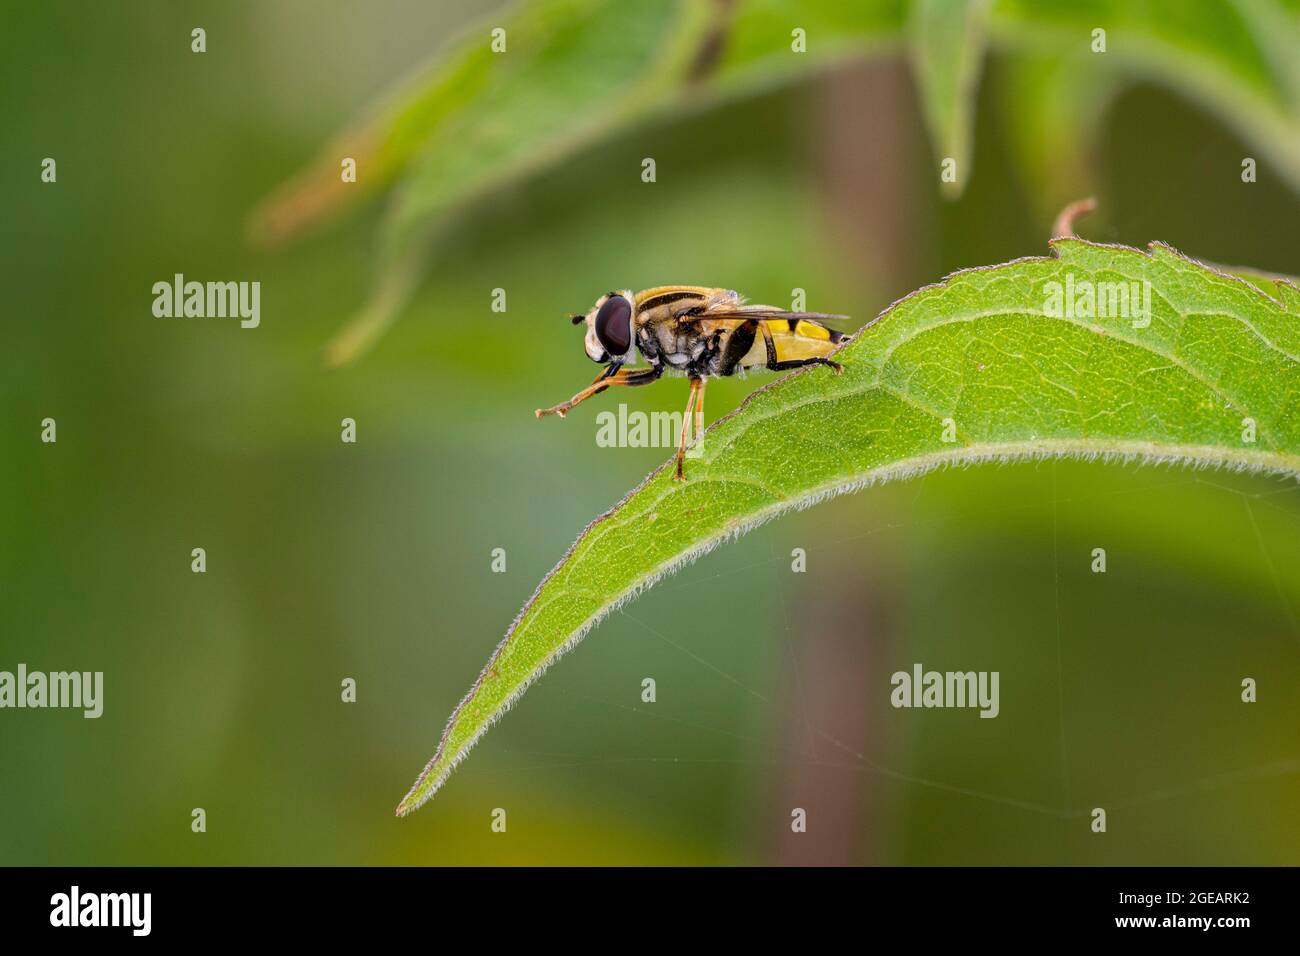 Sun fly / Marsh hoverfly (Helophilus pendulus / Helophilus similis) resting on leaf in summer Stock Photo